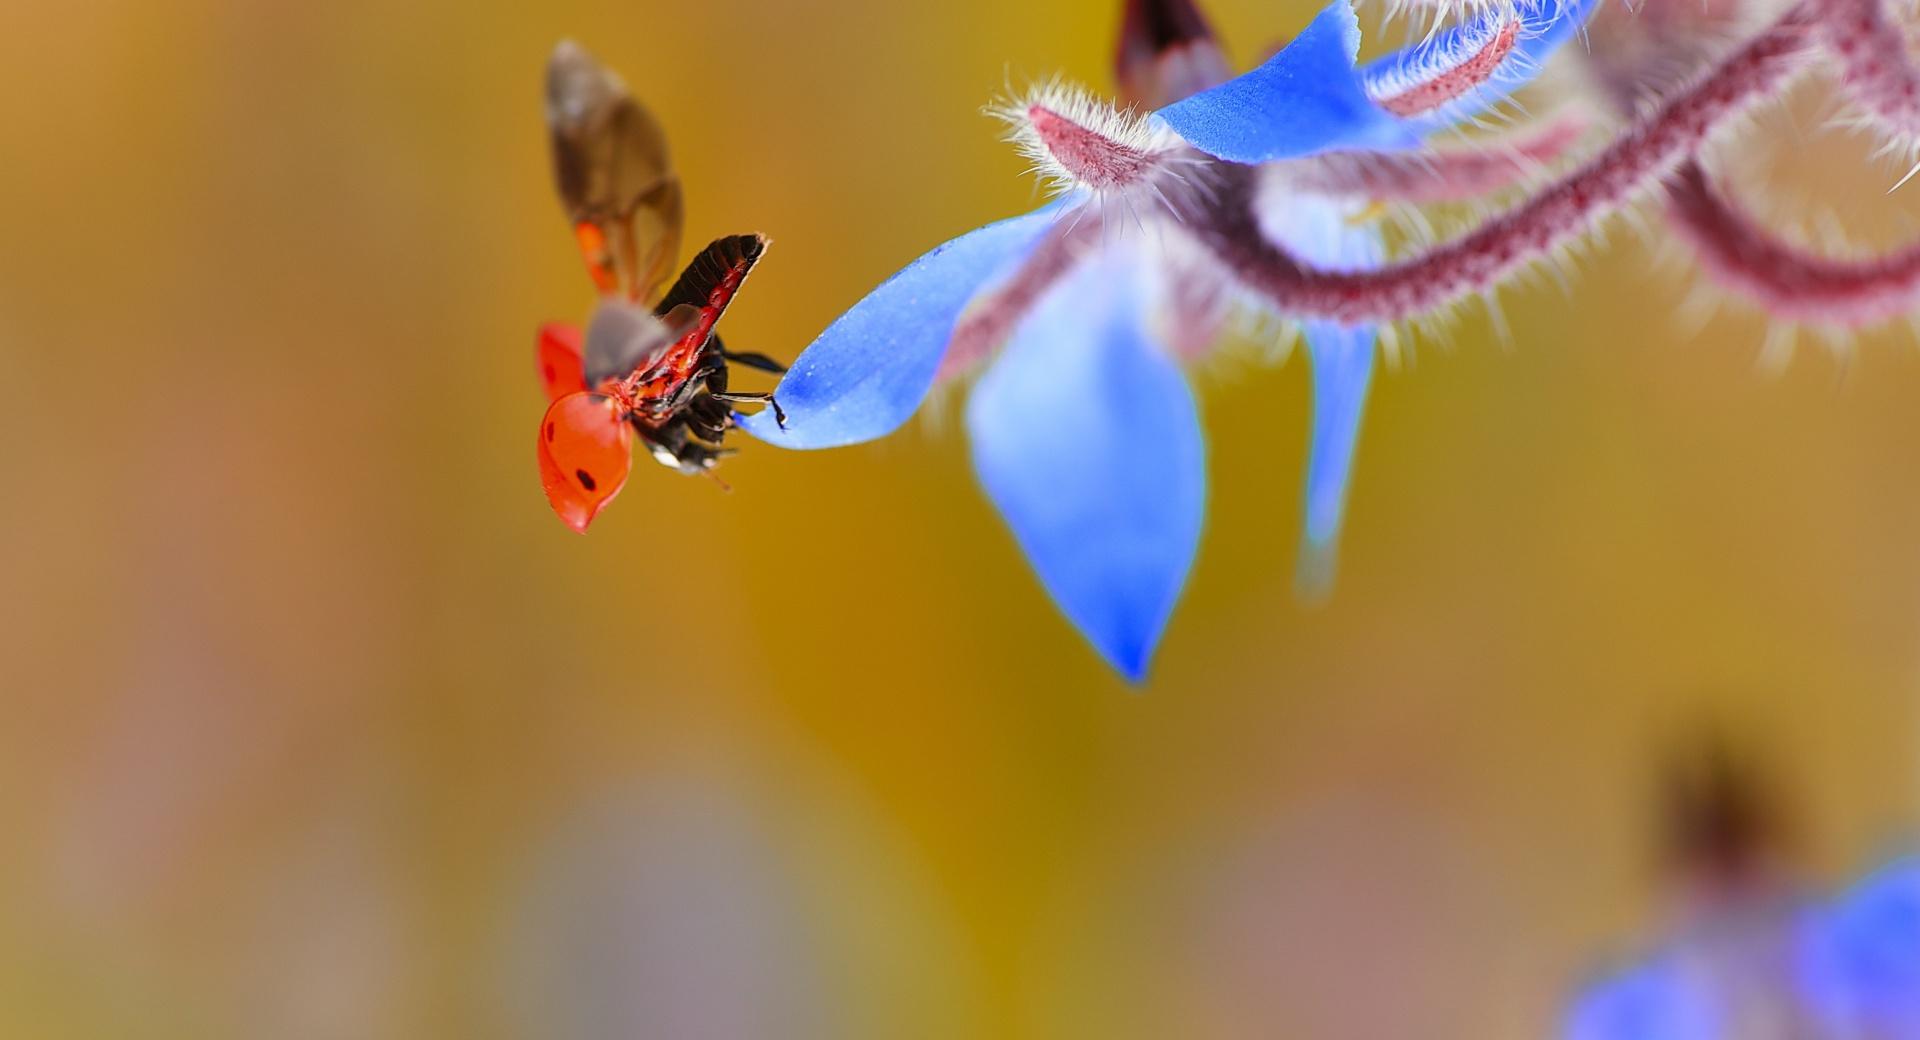 Ladybug Taking Flight at 1024 x 1024 iPad size wallpapers HD quality